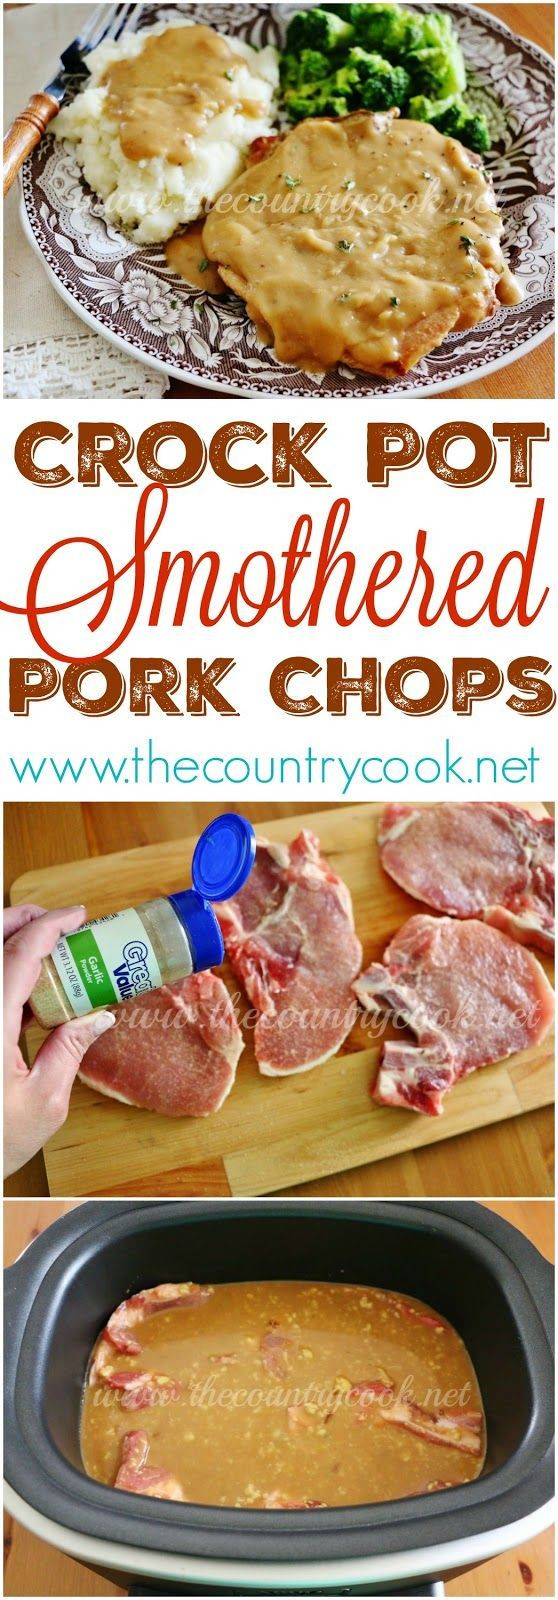 Healthy Crock Pot Pork Chops
 17 images about crockpot reciepes on Pinterest